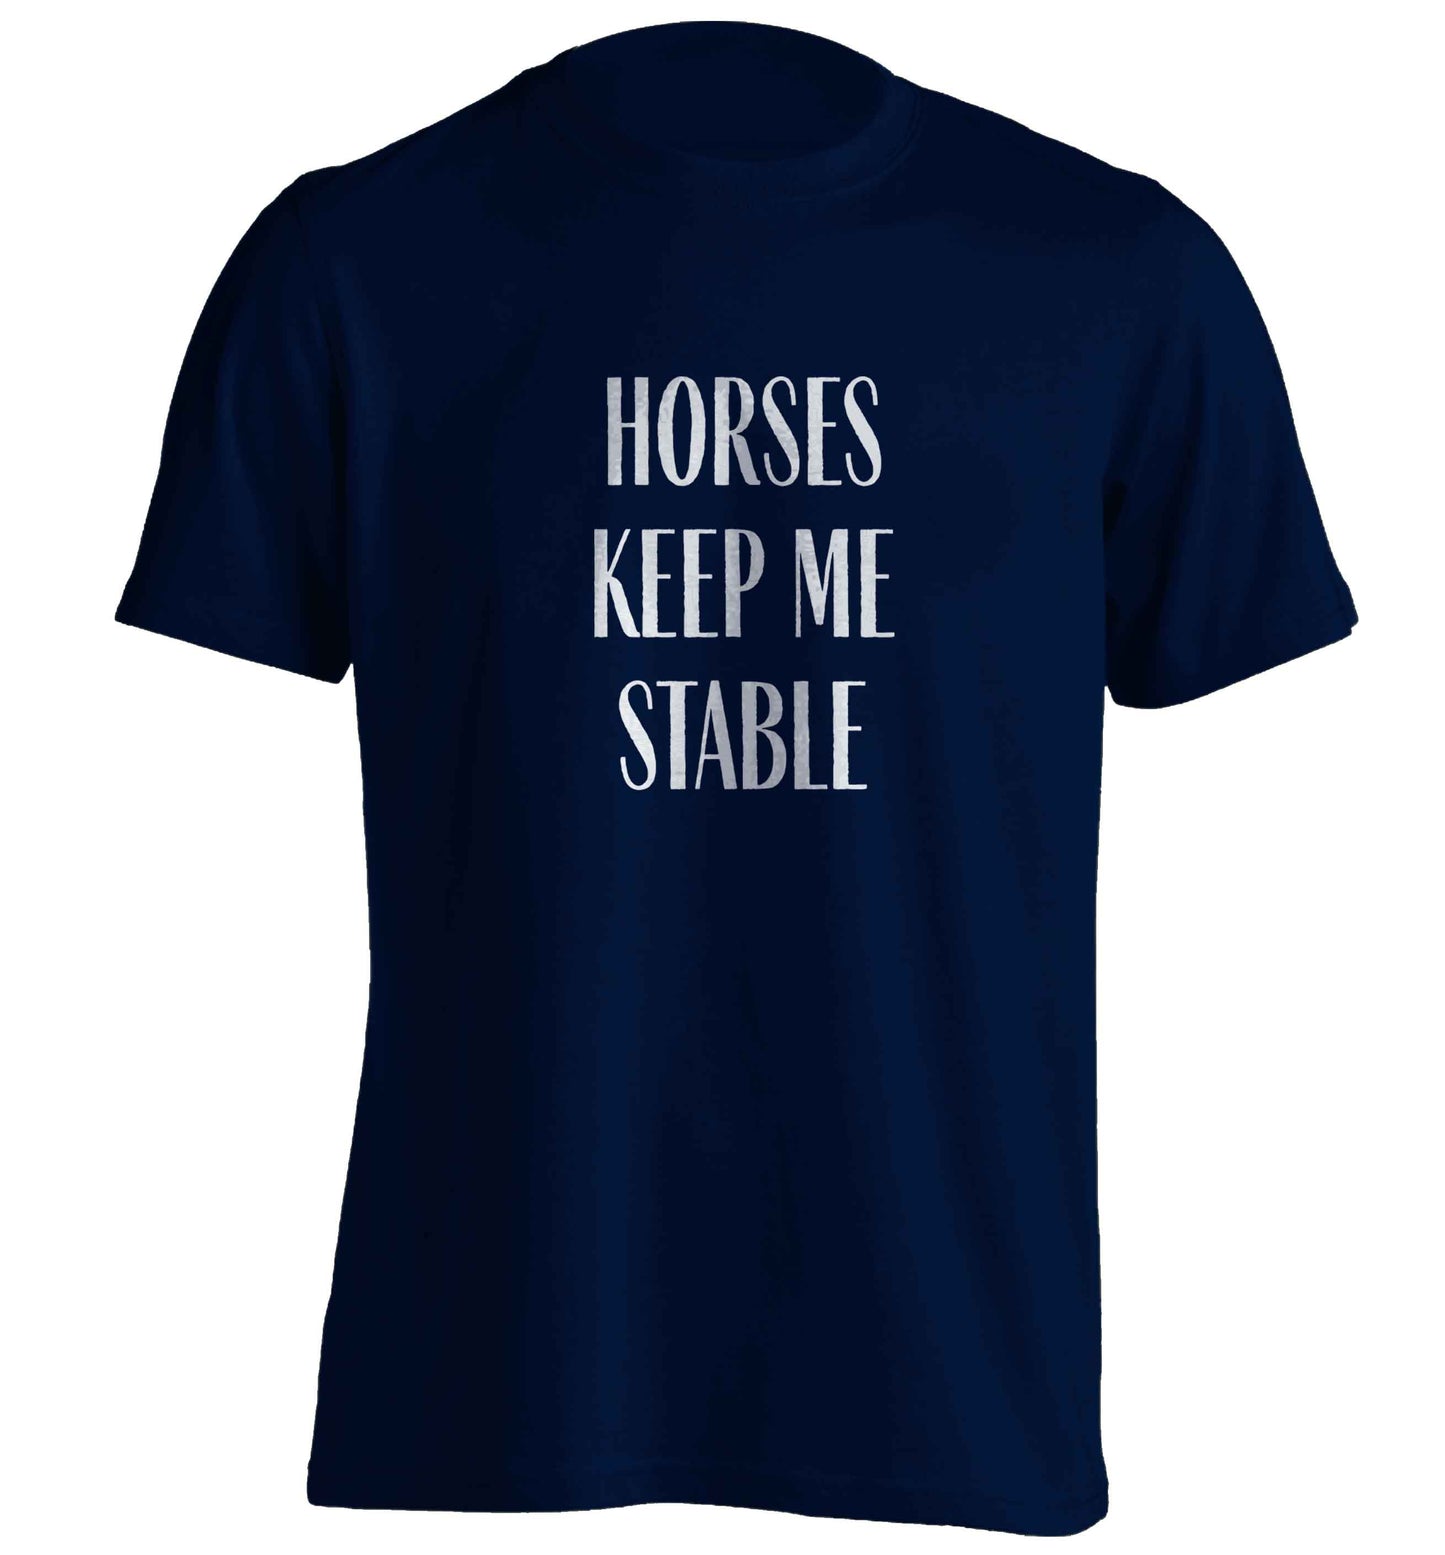 Horses keep me stable adults unisex navy Tshirt 2XL